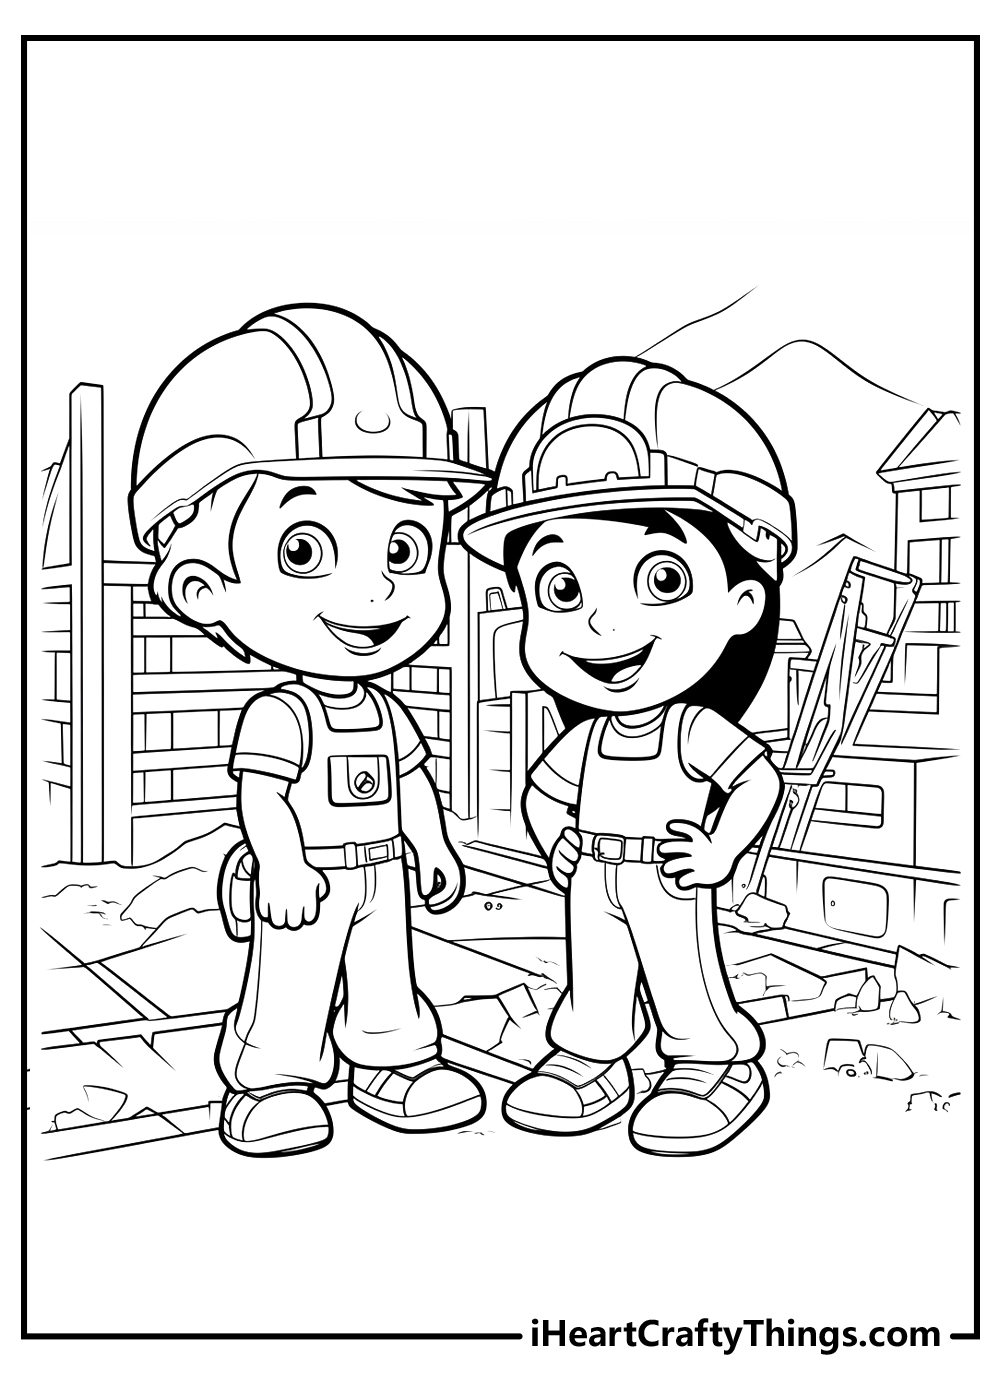 Construction Site Mini Coloring Roll [Book]